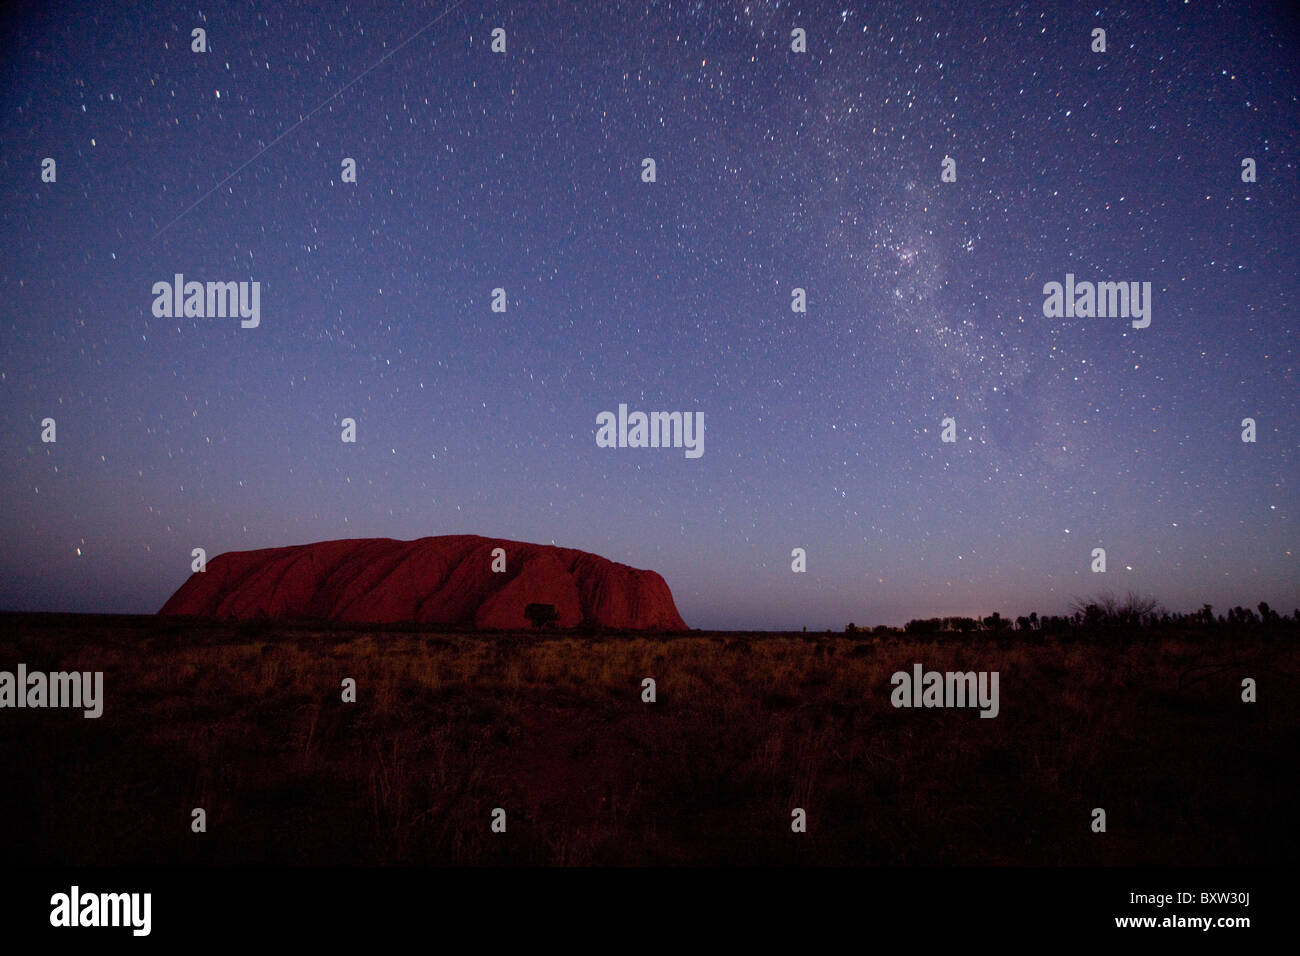 Australien, Northern Territory, Uluru - Kata Tjuta National Park, Sterne Kreis über Ayers Rock in der Abenddämmerung am Sommerabend Stockfoto